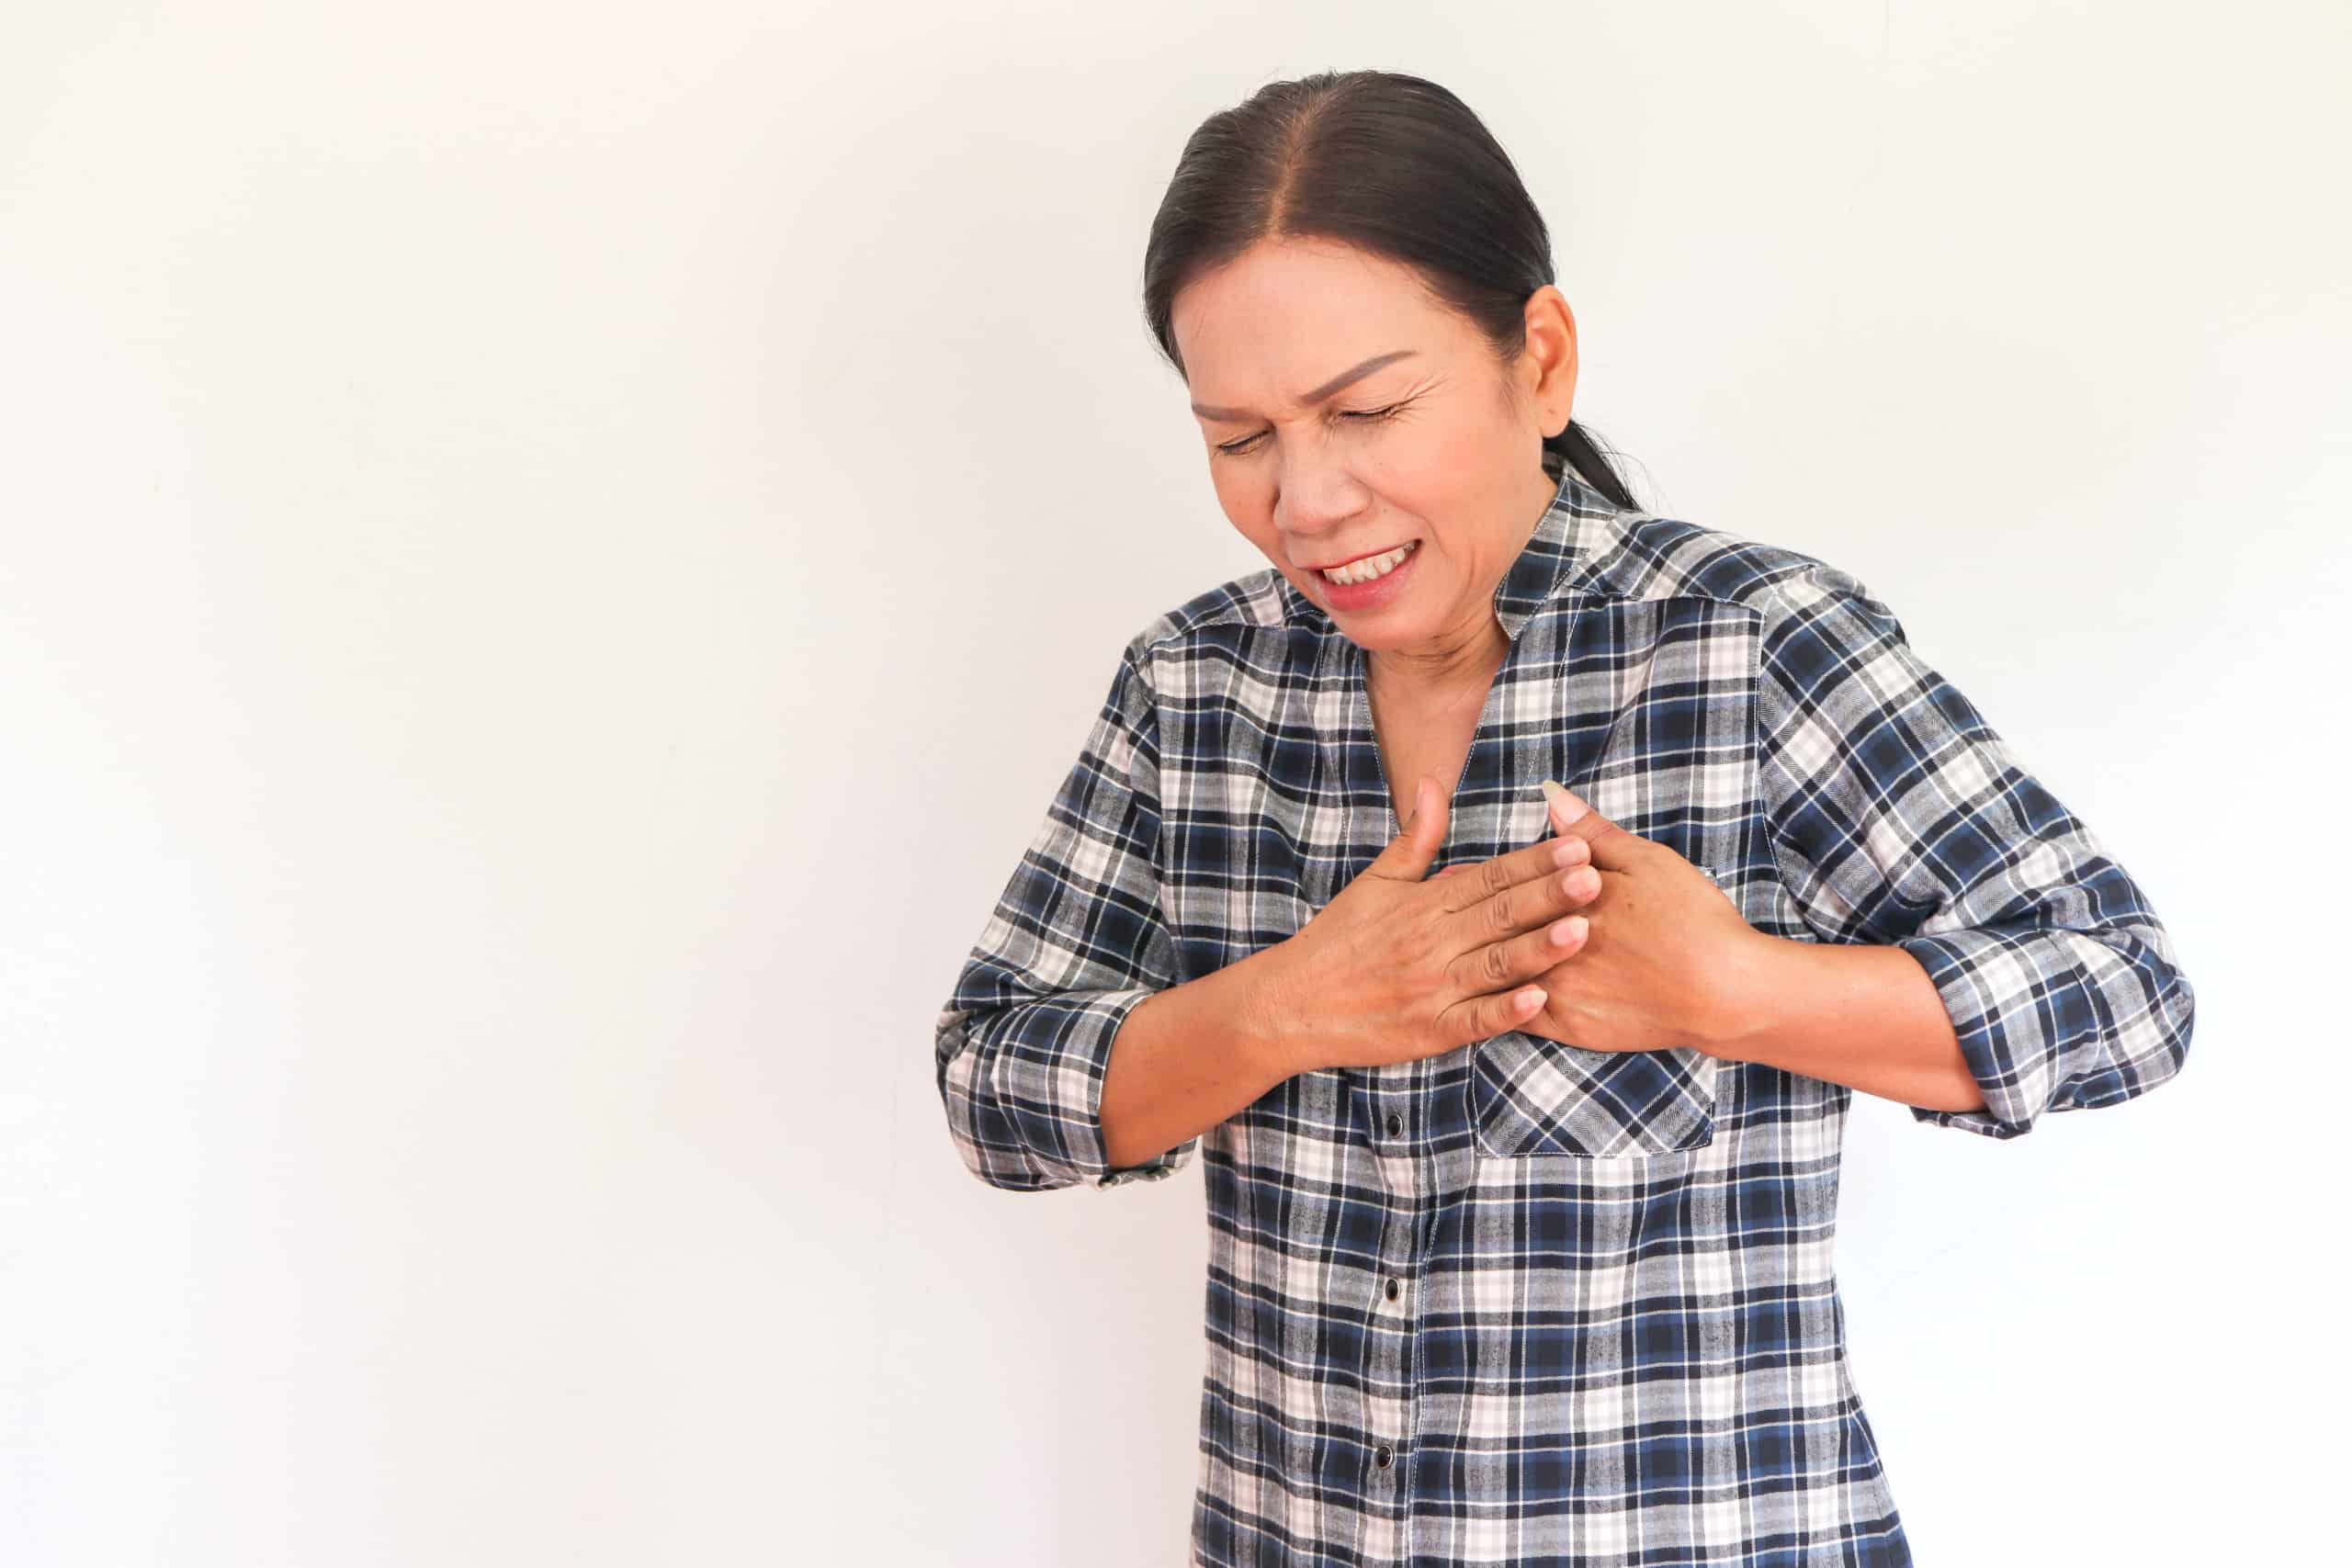 Racing Heart Shortness Of Breath Tachycardia Svt Or Panic Attack Hospitality Health Er